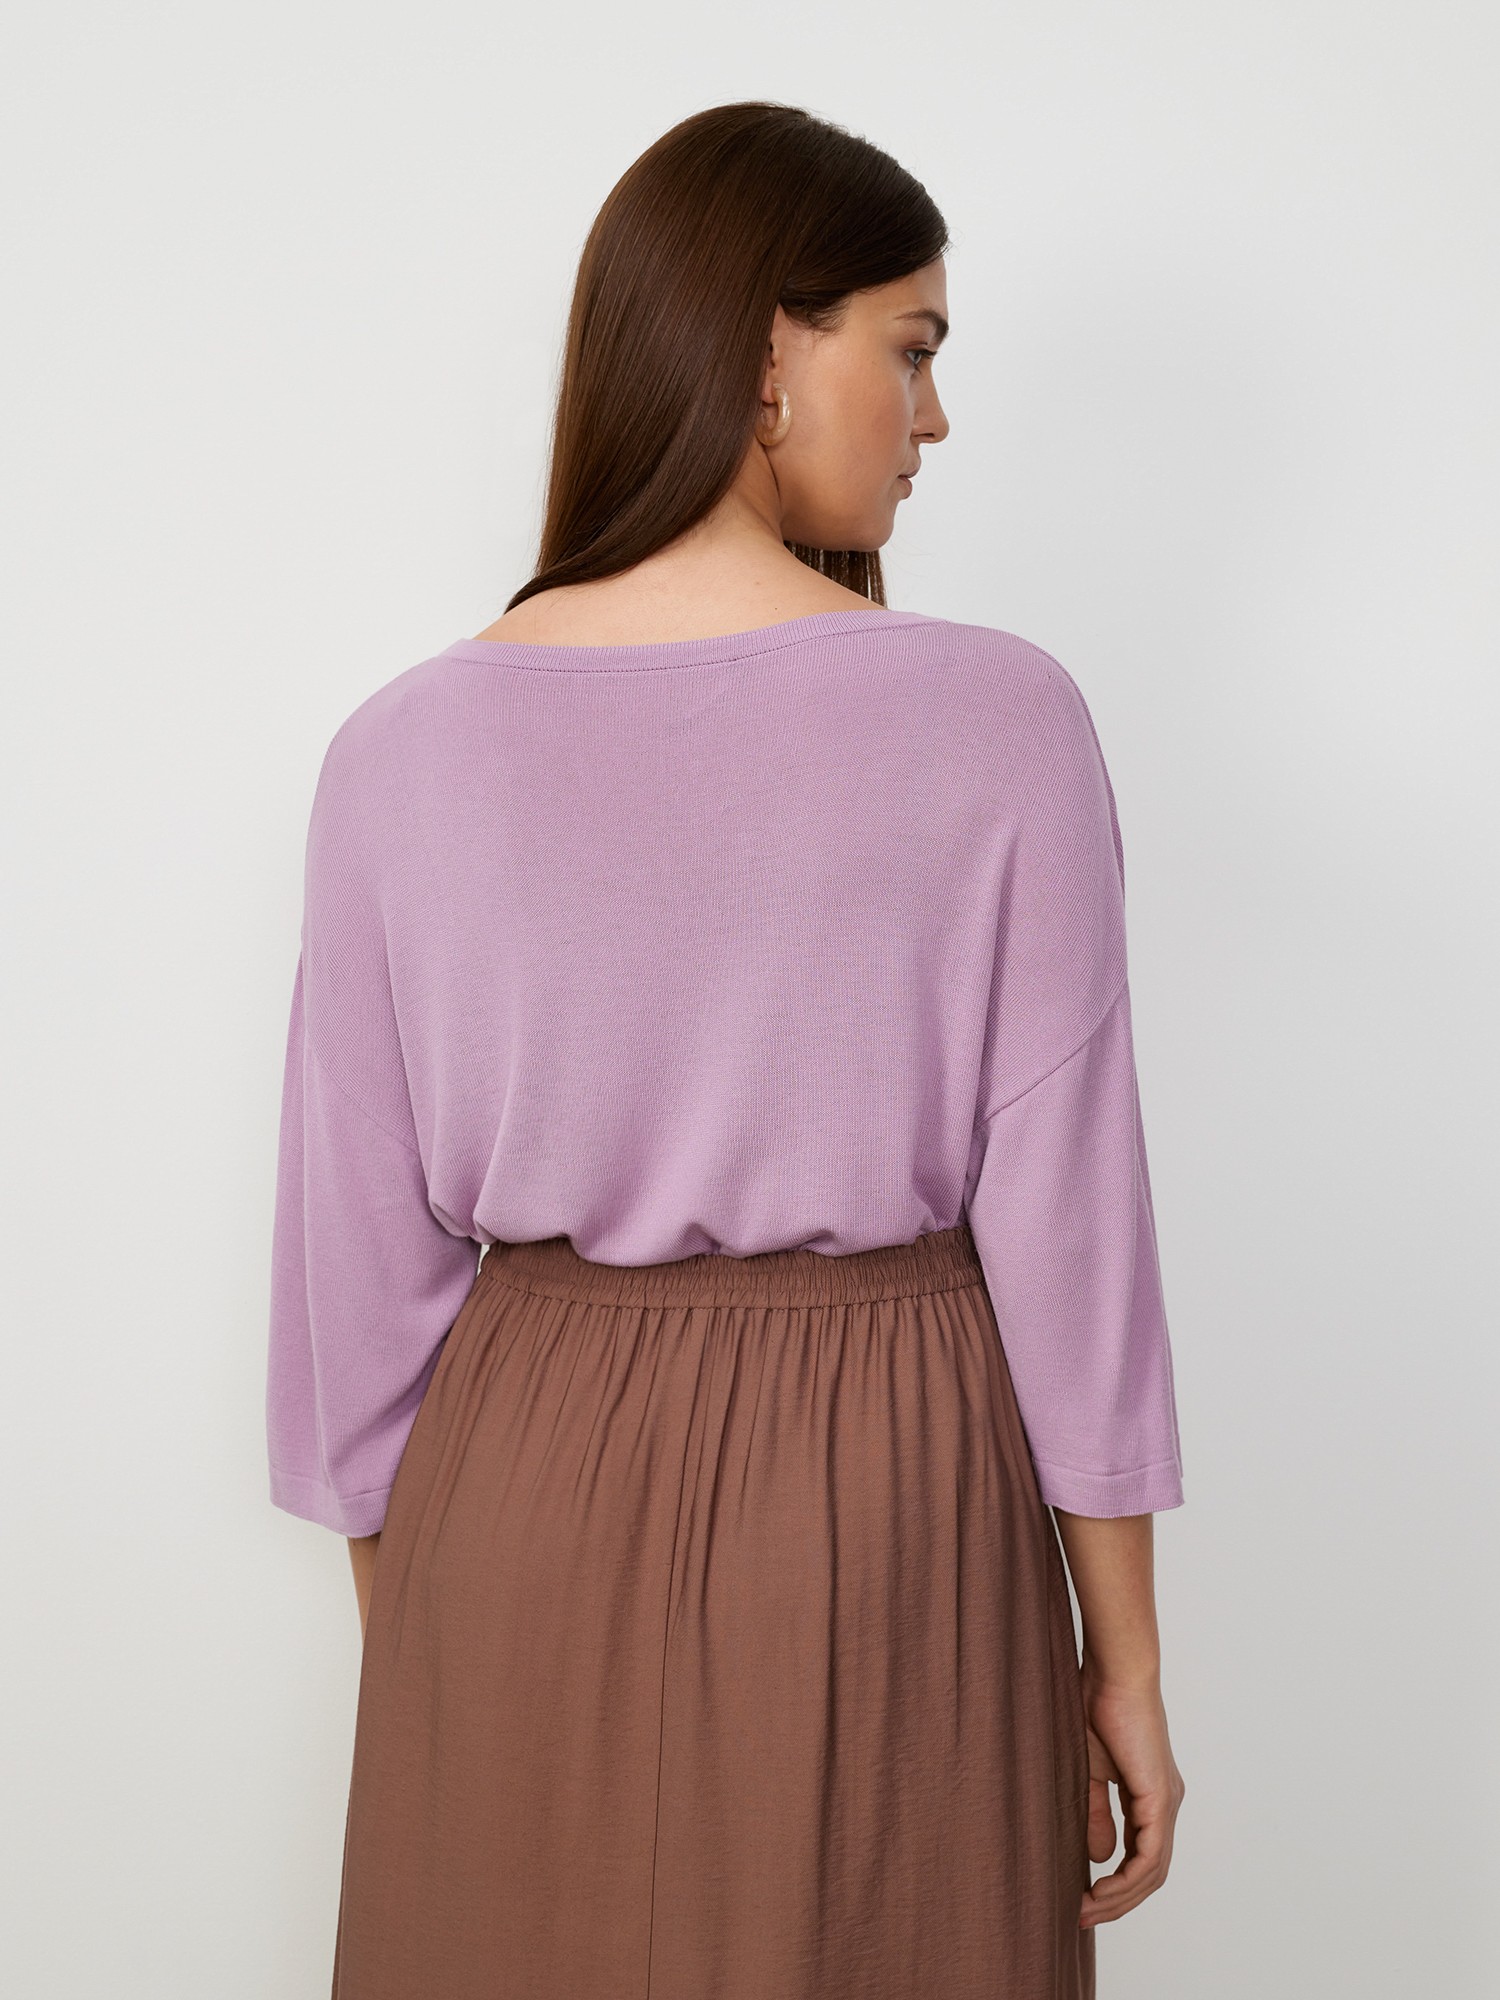 Блуза вязаная с монилью Lalis BL1069V, цвет фиолетовый, размер 56 - фото 4